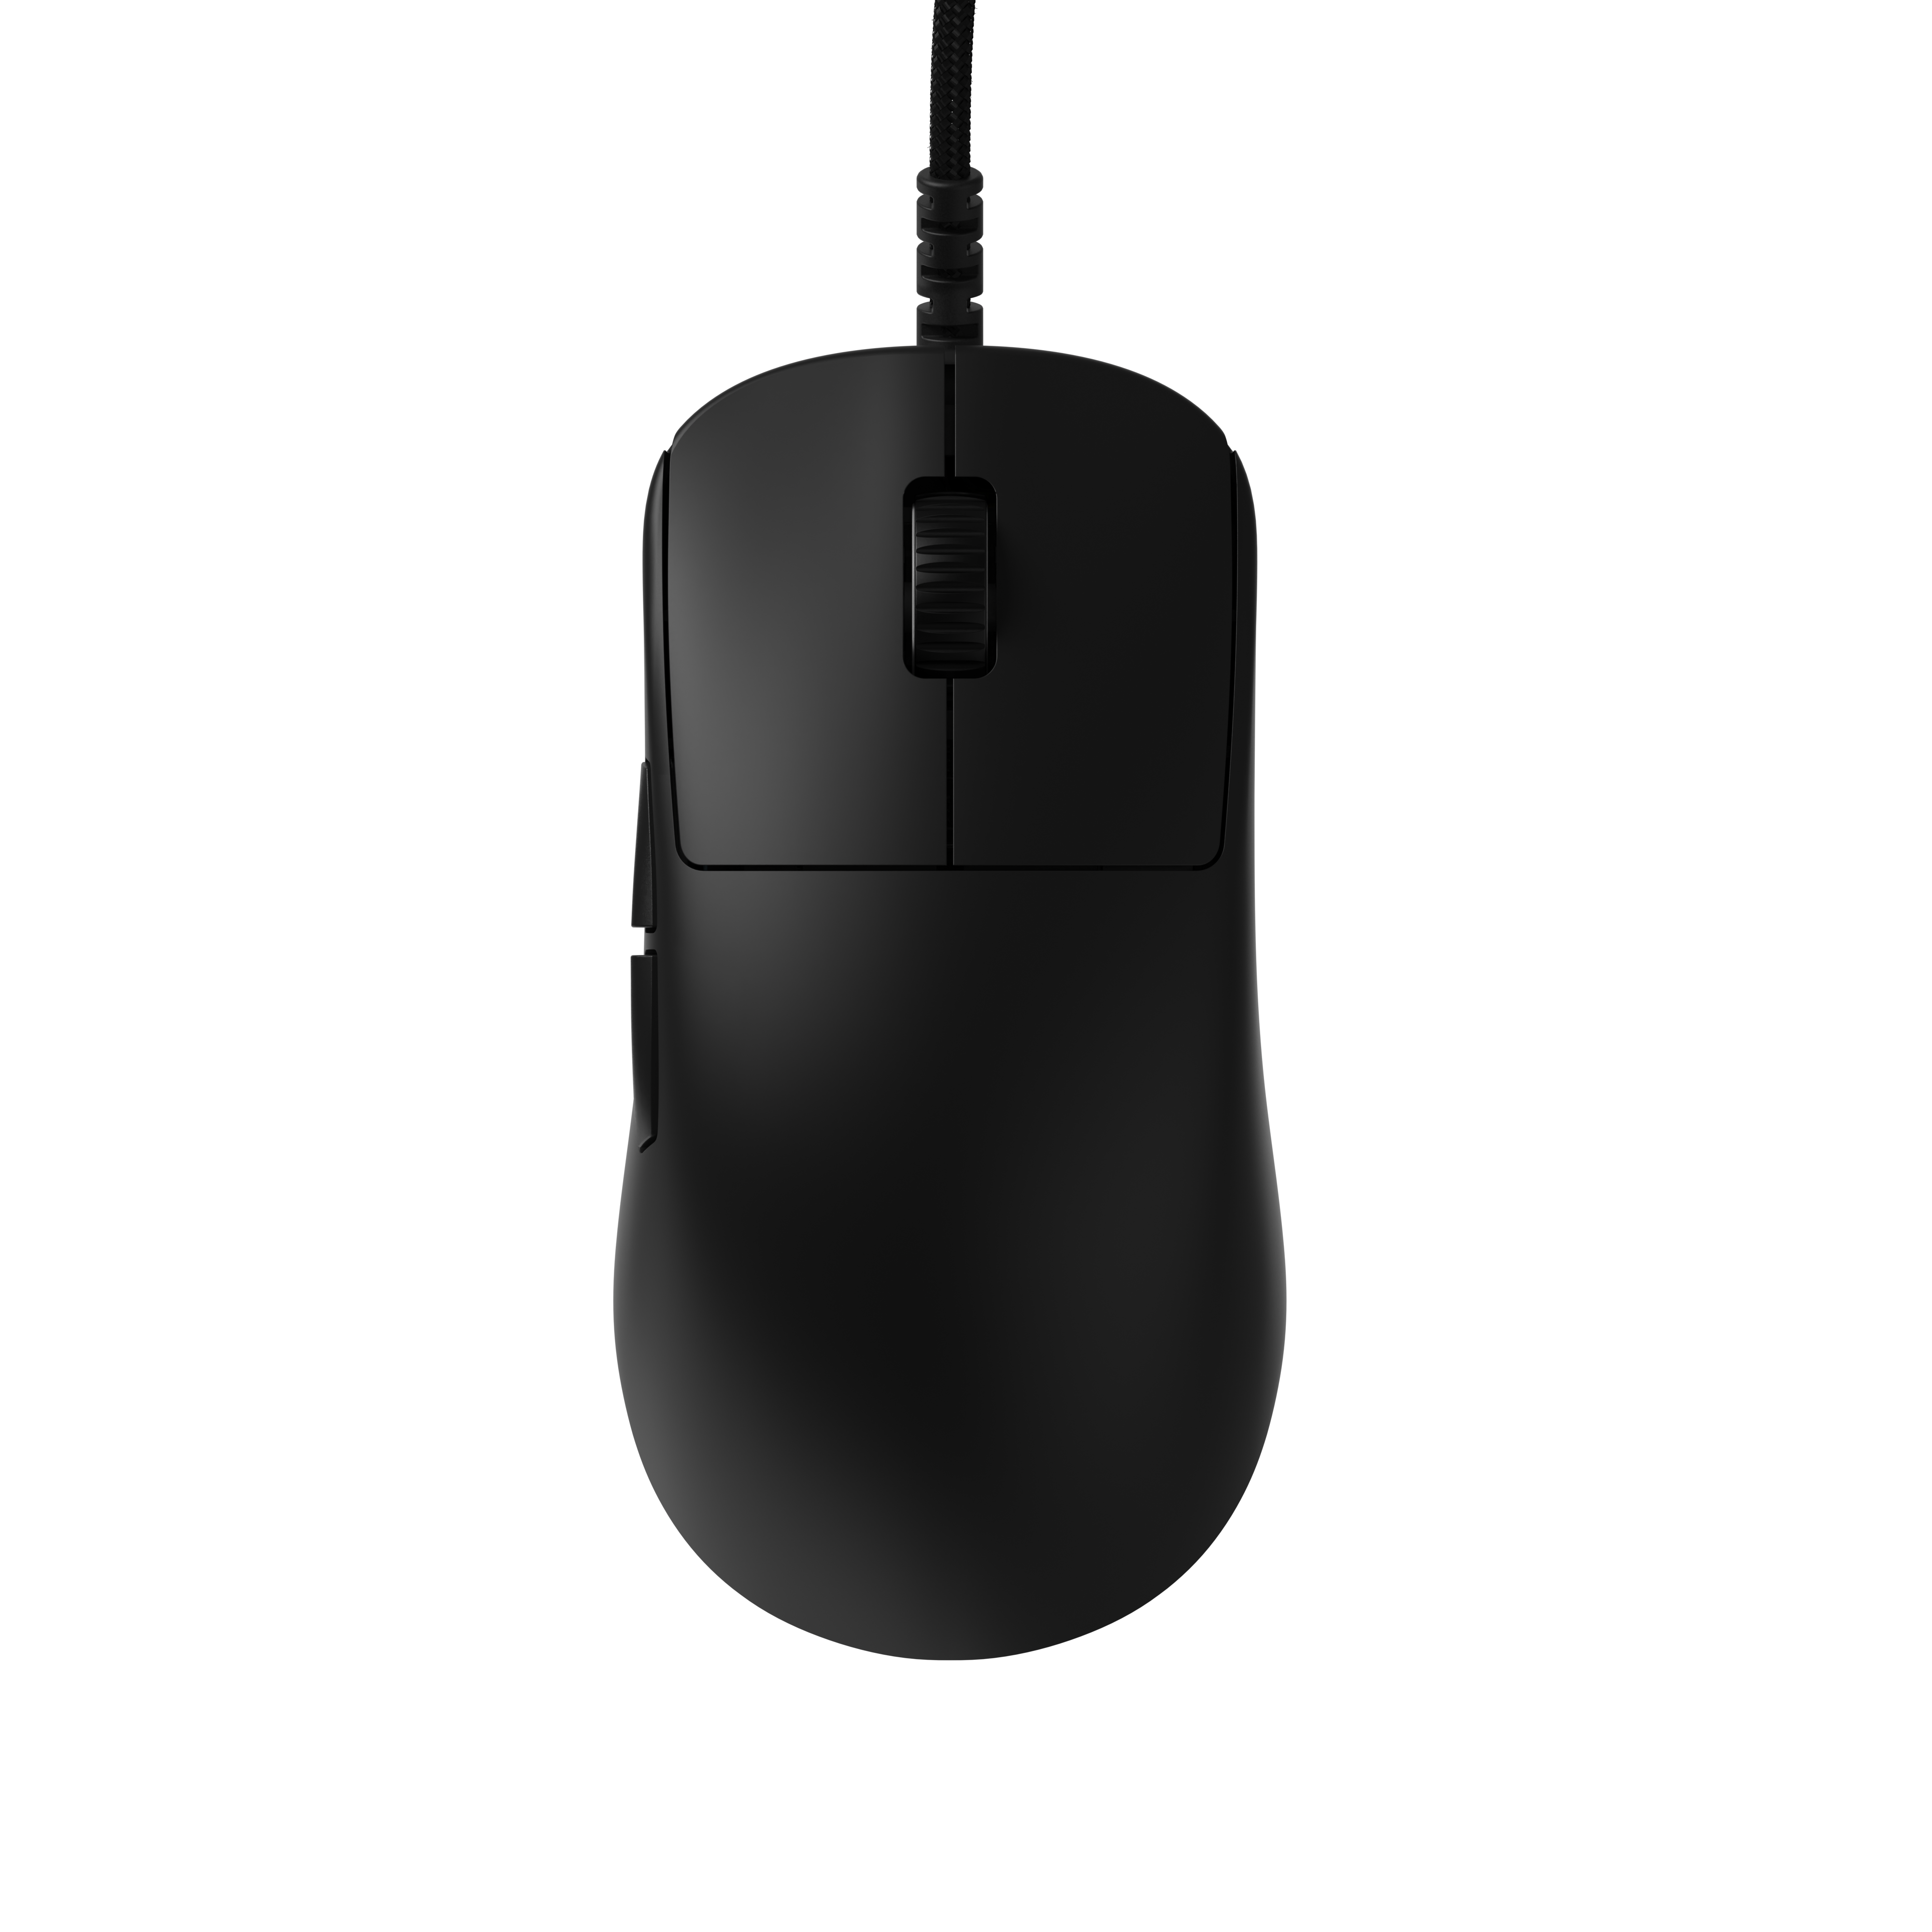 Endgame Gear - Endgame Gear OP1 USB Optical Gaming Mouse - Black